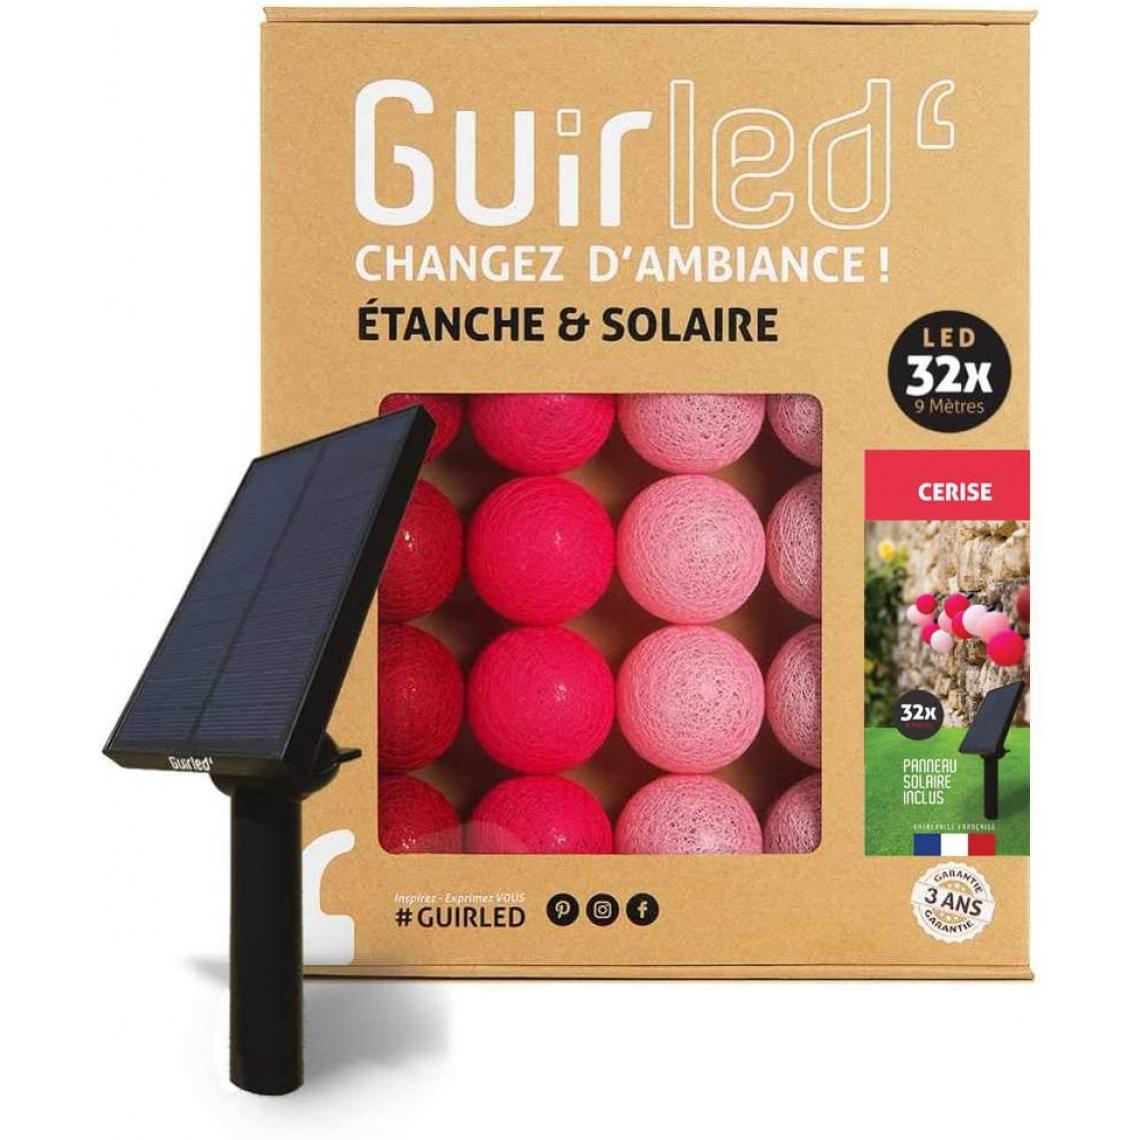 Guirled - Guirlande boule lumineuse 32 LED Outdoor - Cerise - Eclairage solaire